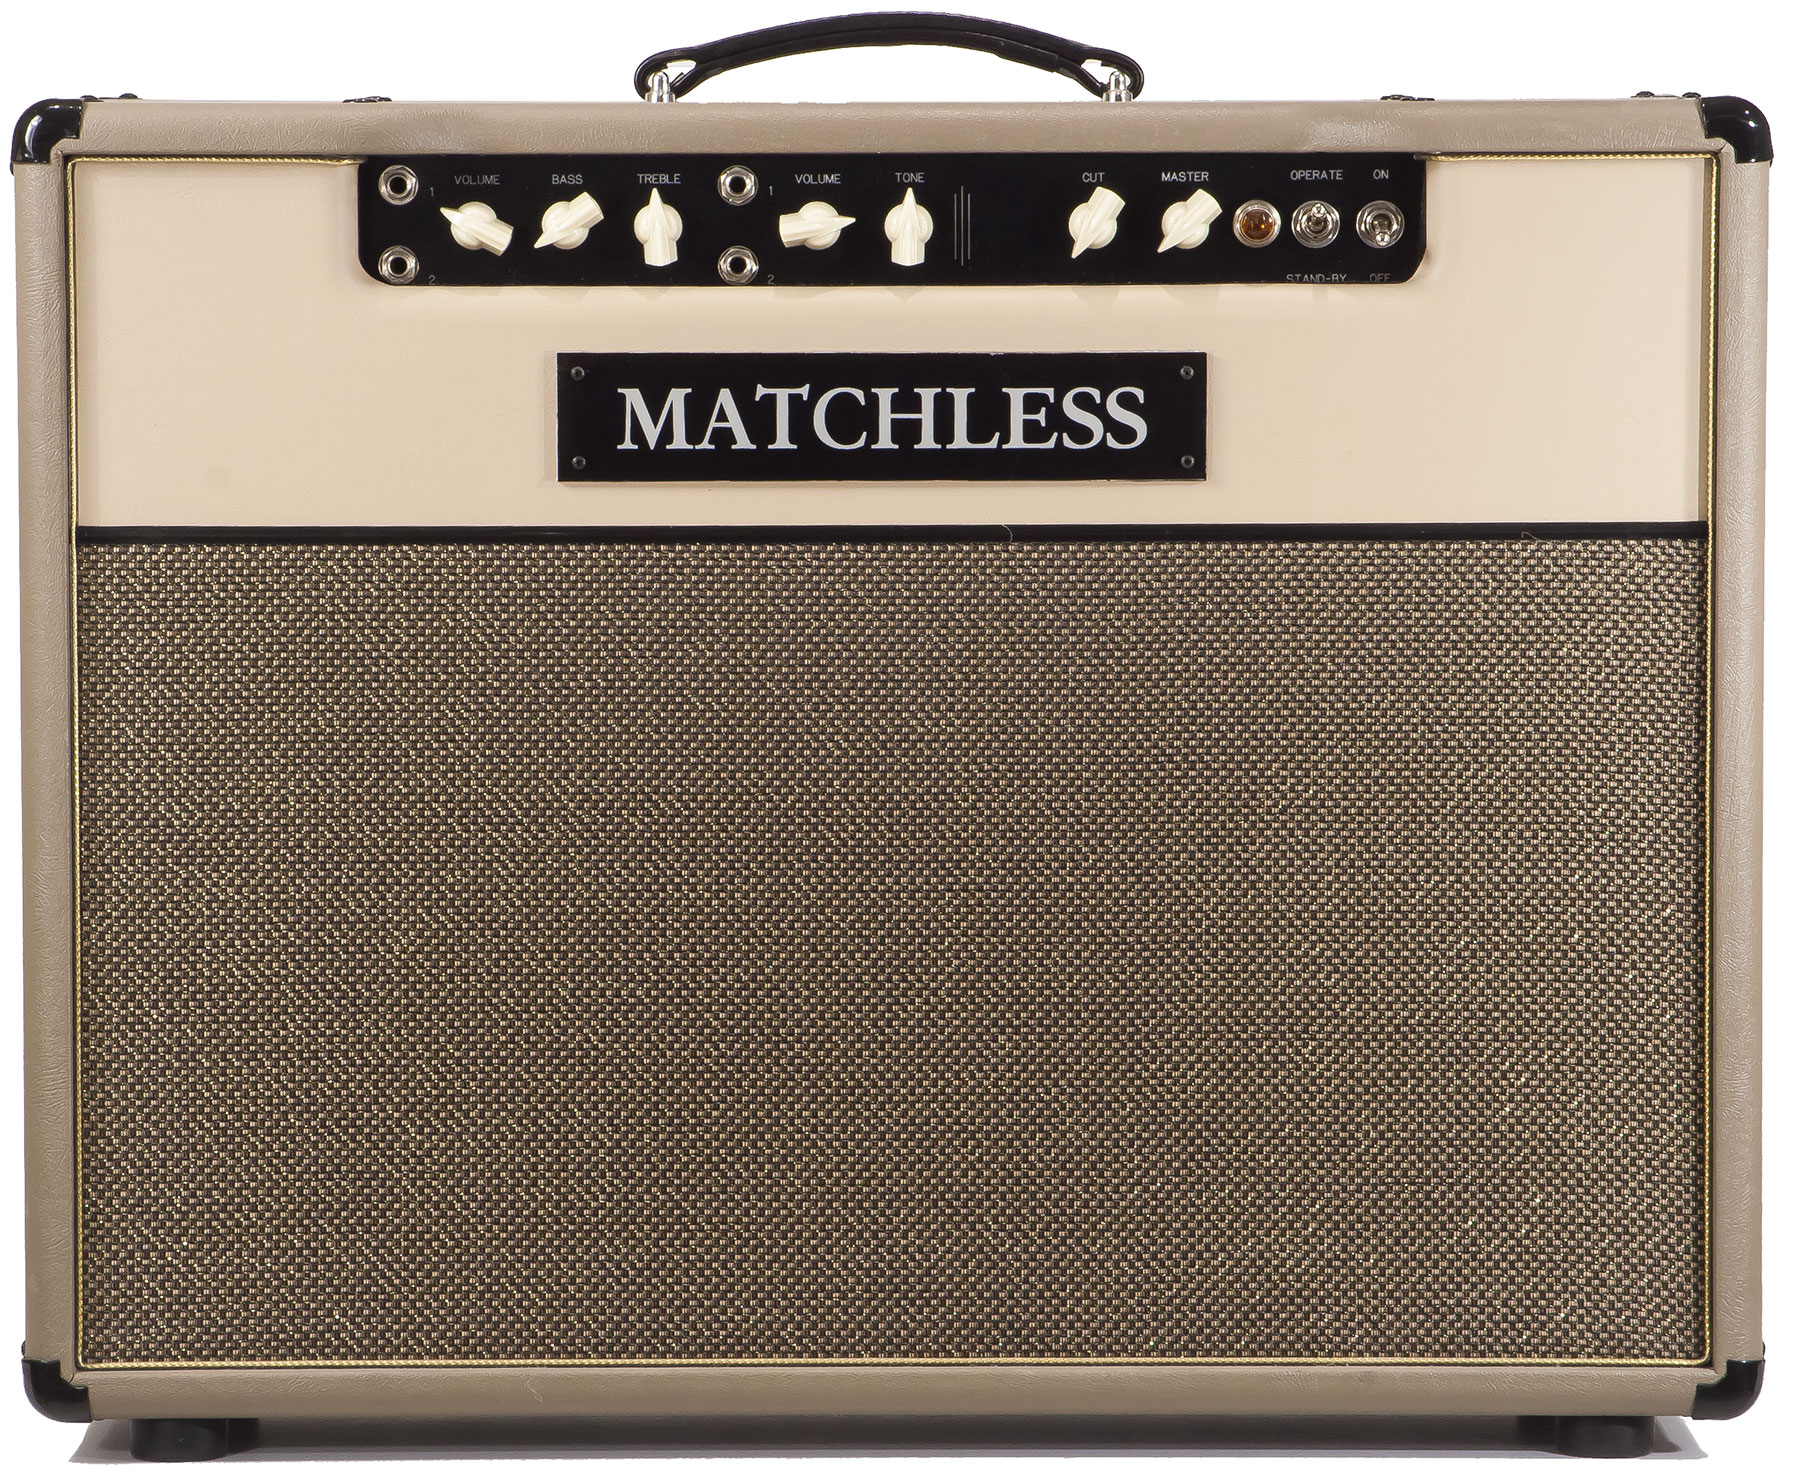 Matchless Dc-30 30w 2x12 Cappuccino/gold - Combo amplificador para guitarra eléctrica - Variation 4